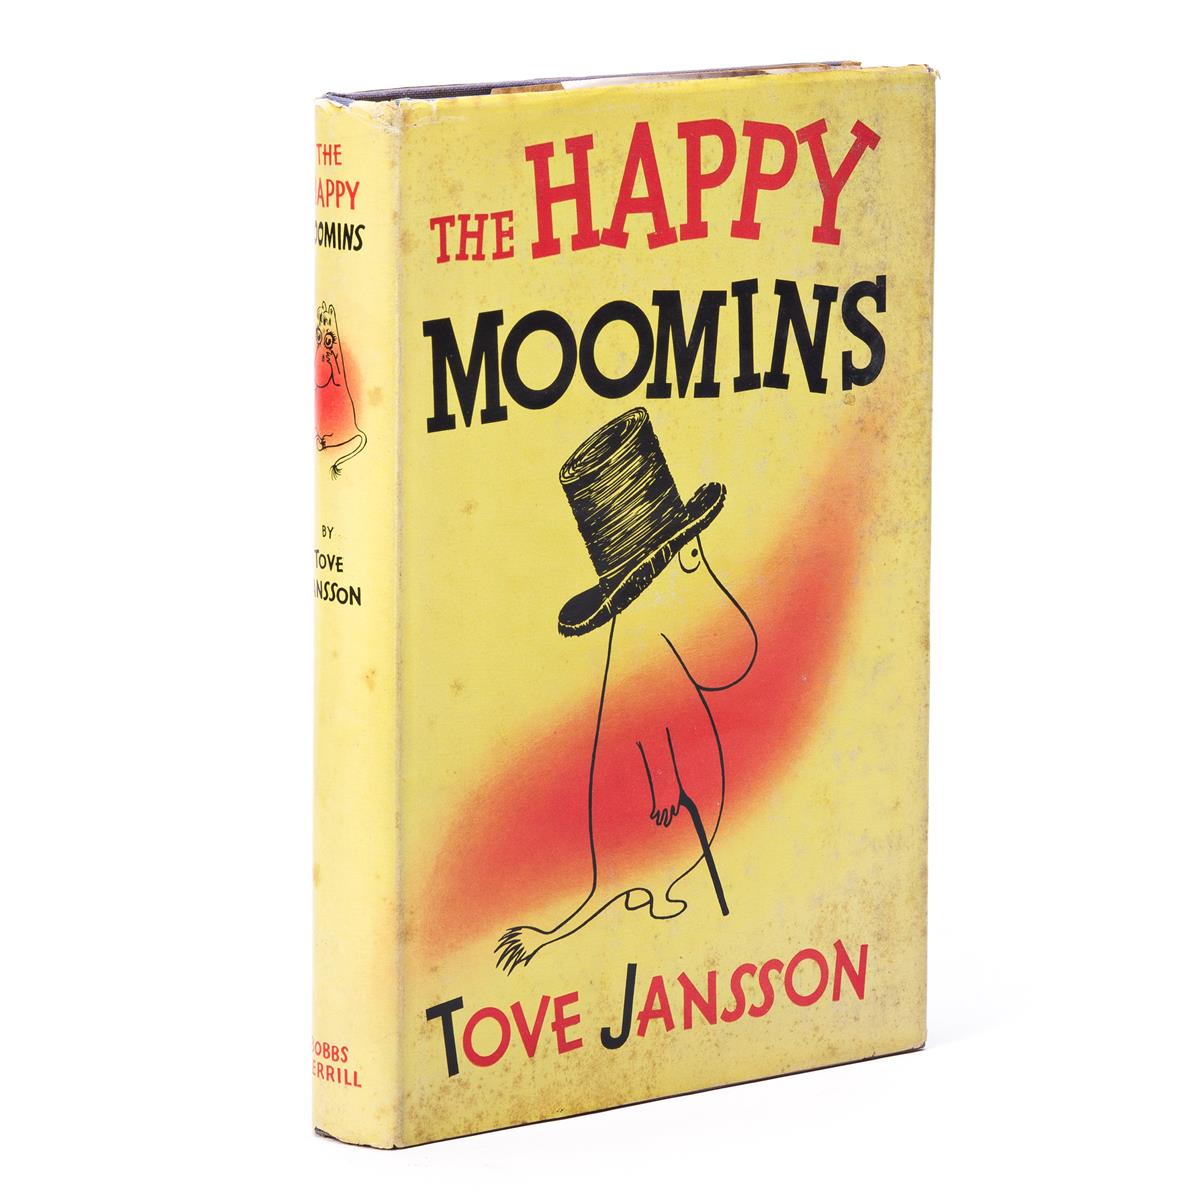 (CHILDRENS LITERATURE.) Jansson, Tove. The Happy Moomins.